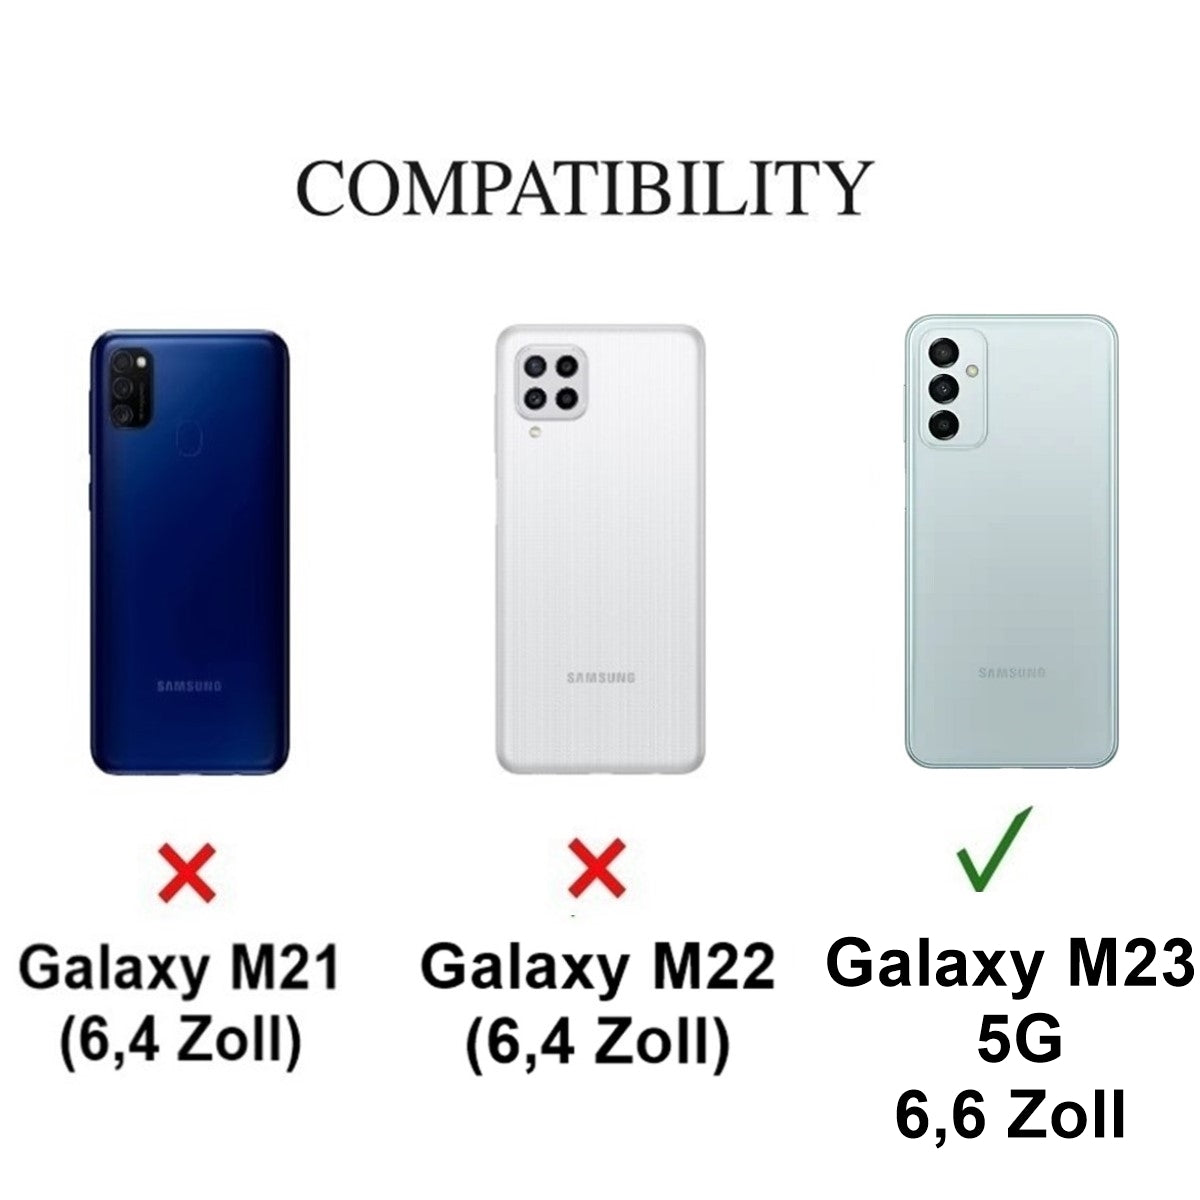 Hülle für Samsung Galaxy M13/M23 5G Handyhülle Flip Case Cover Etui Mandala Blau